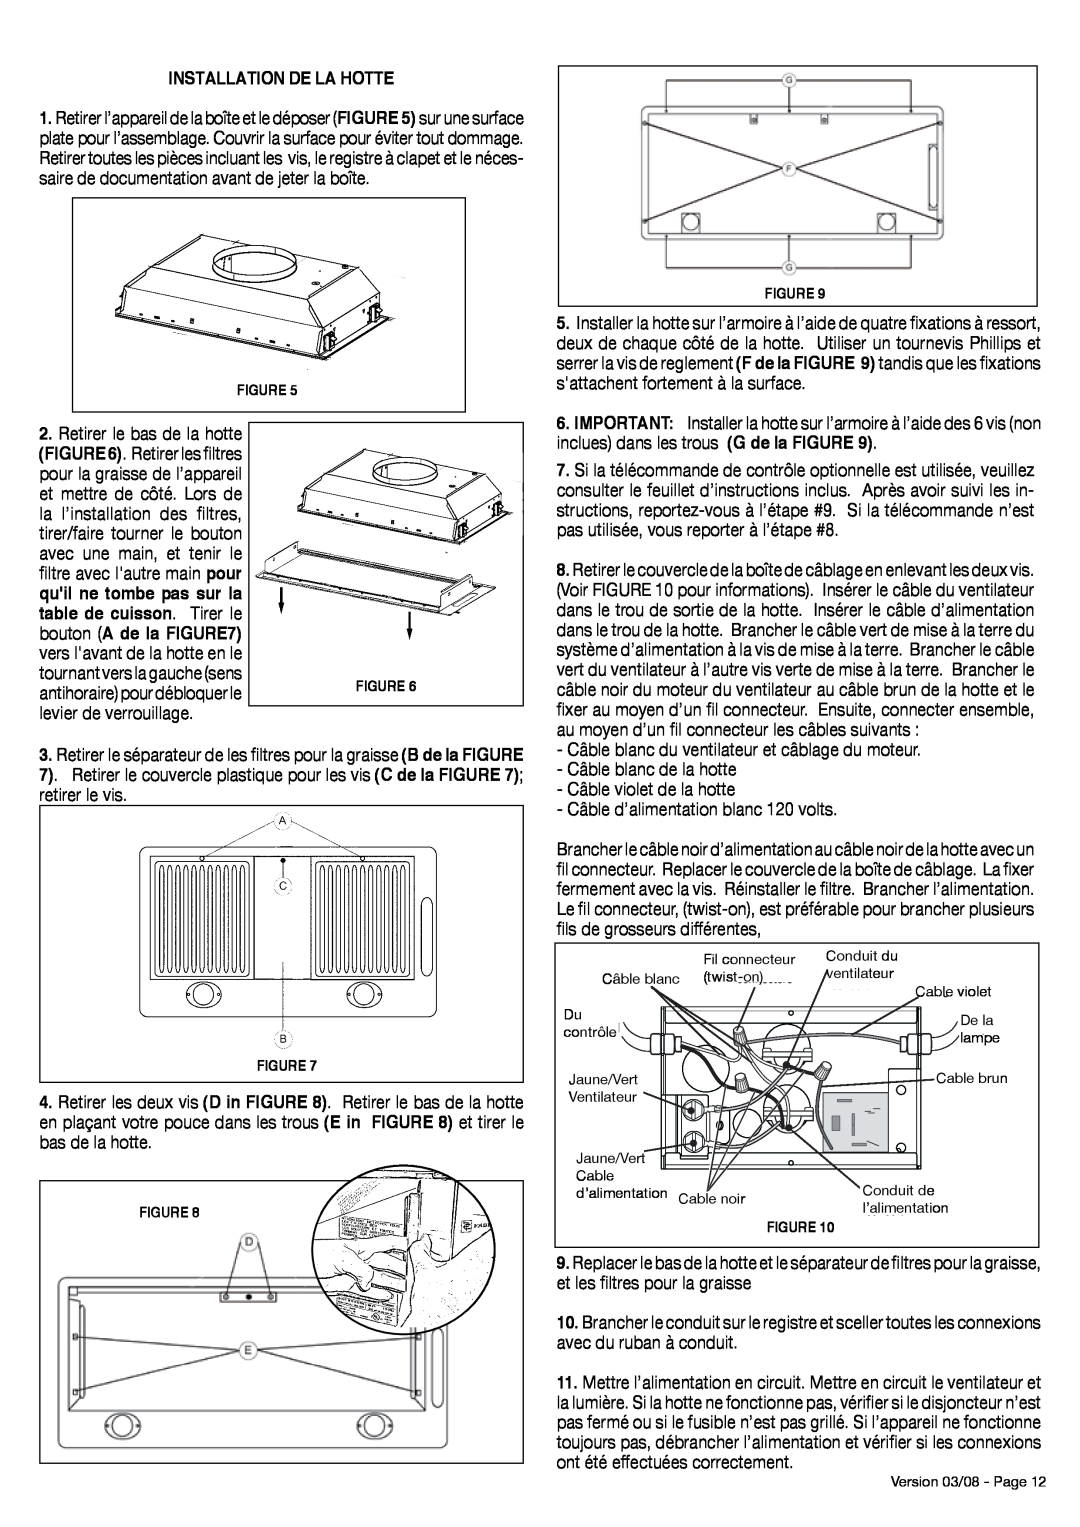 Faber 630003952 installation instructions Installation De La Hotte 